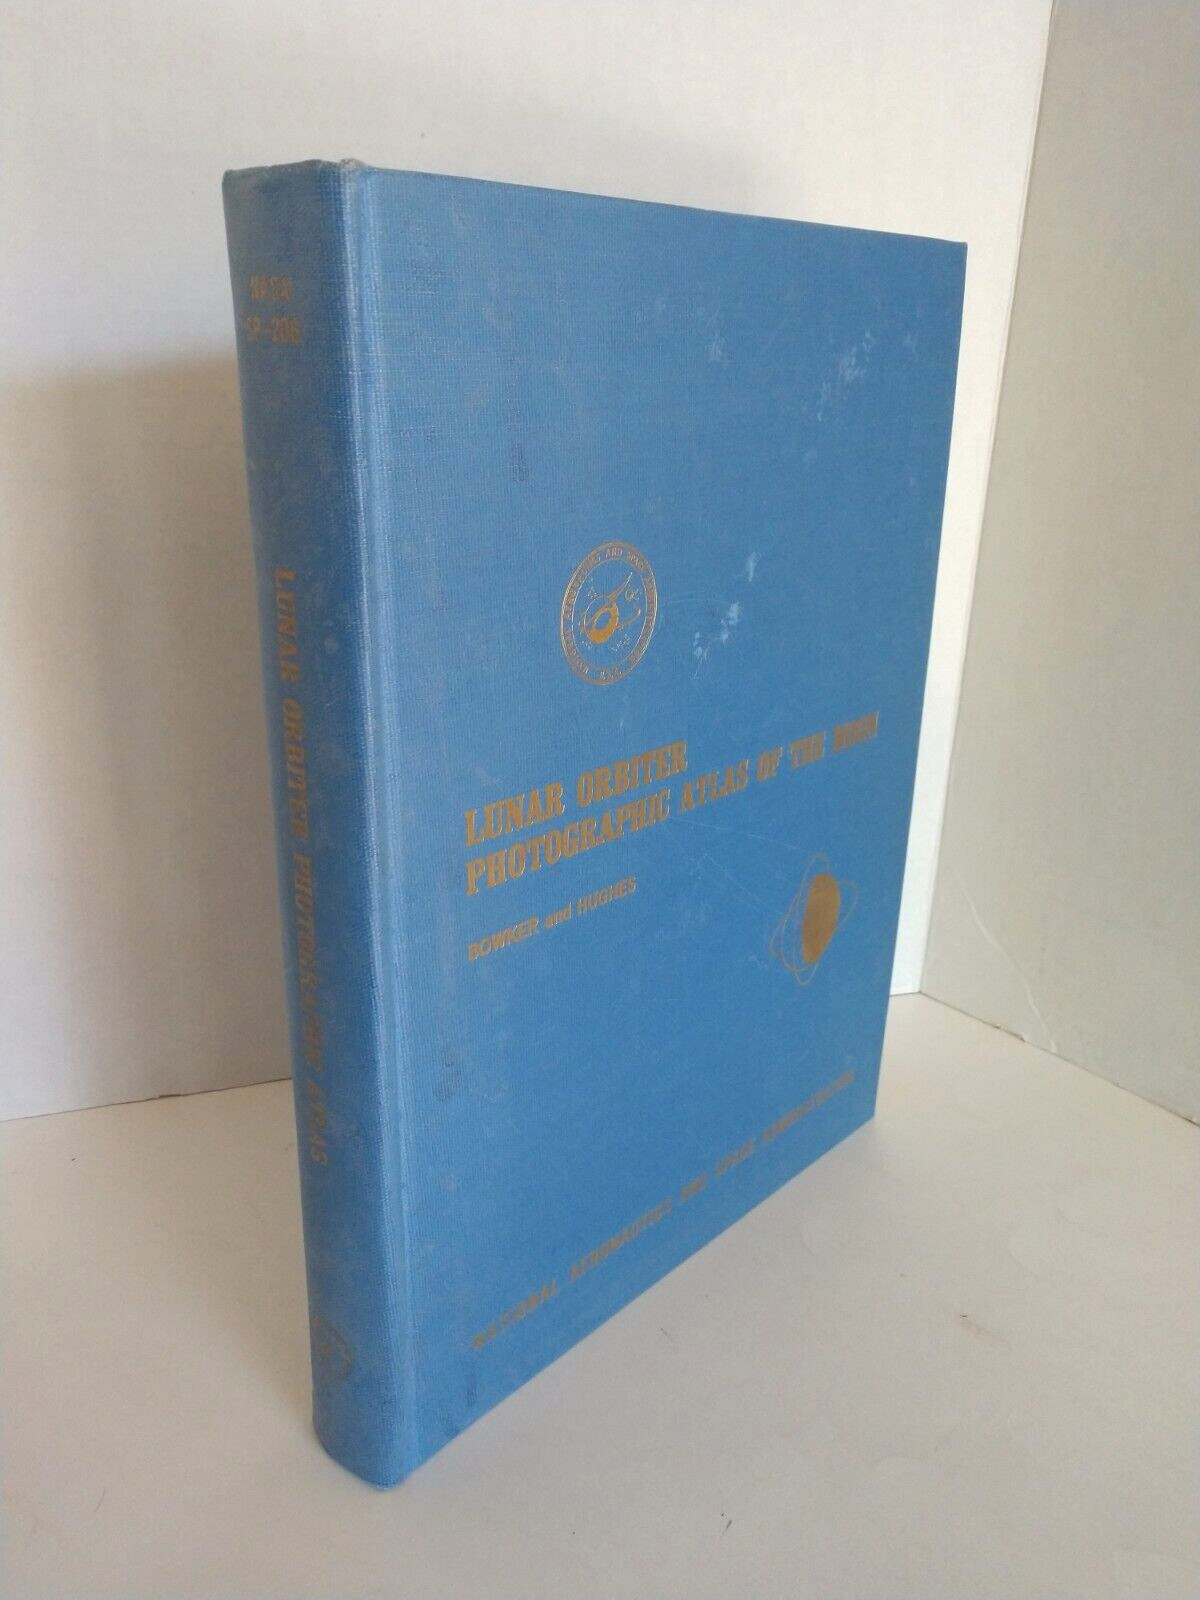 LUNAR ORBITER Photographic ATLAS of the MOON. [NASA SP-206] Hardcover Book 1971